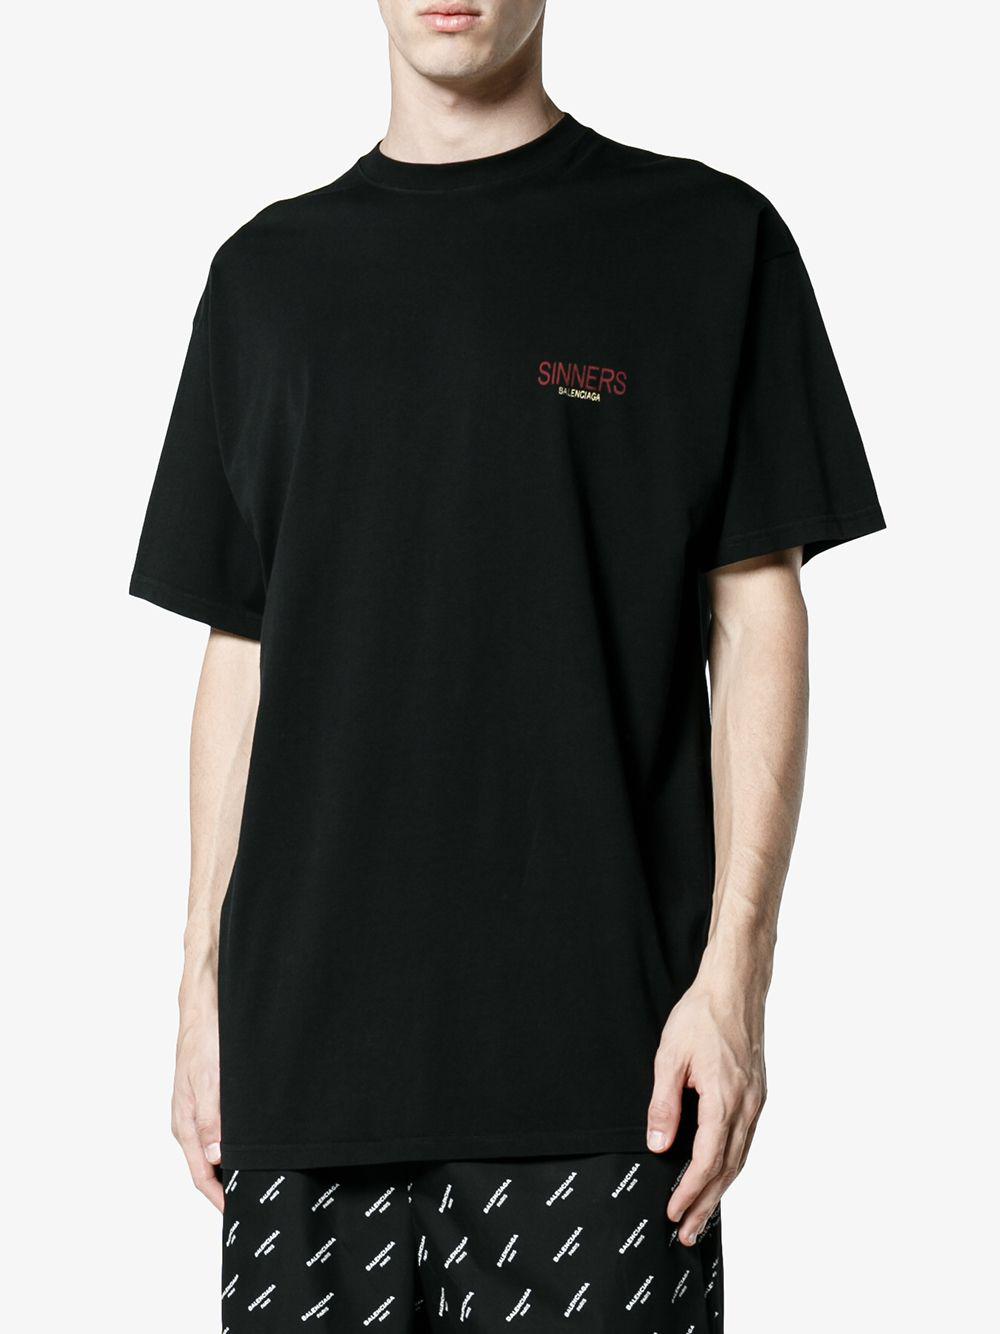 Balenciaga Sinners T-shirt in Black for Men - Lyst